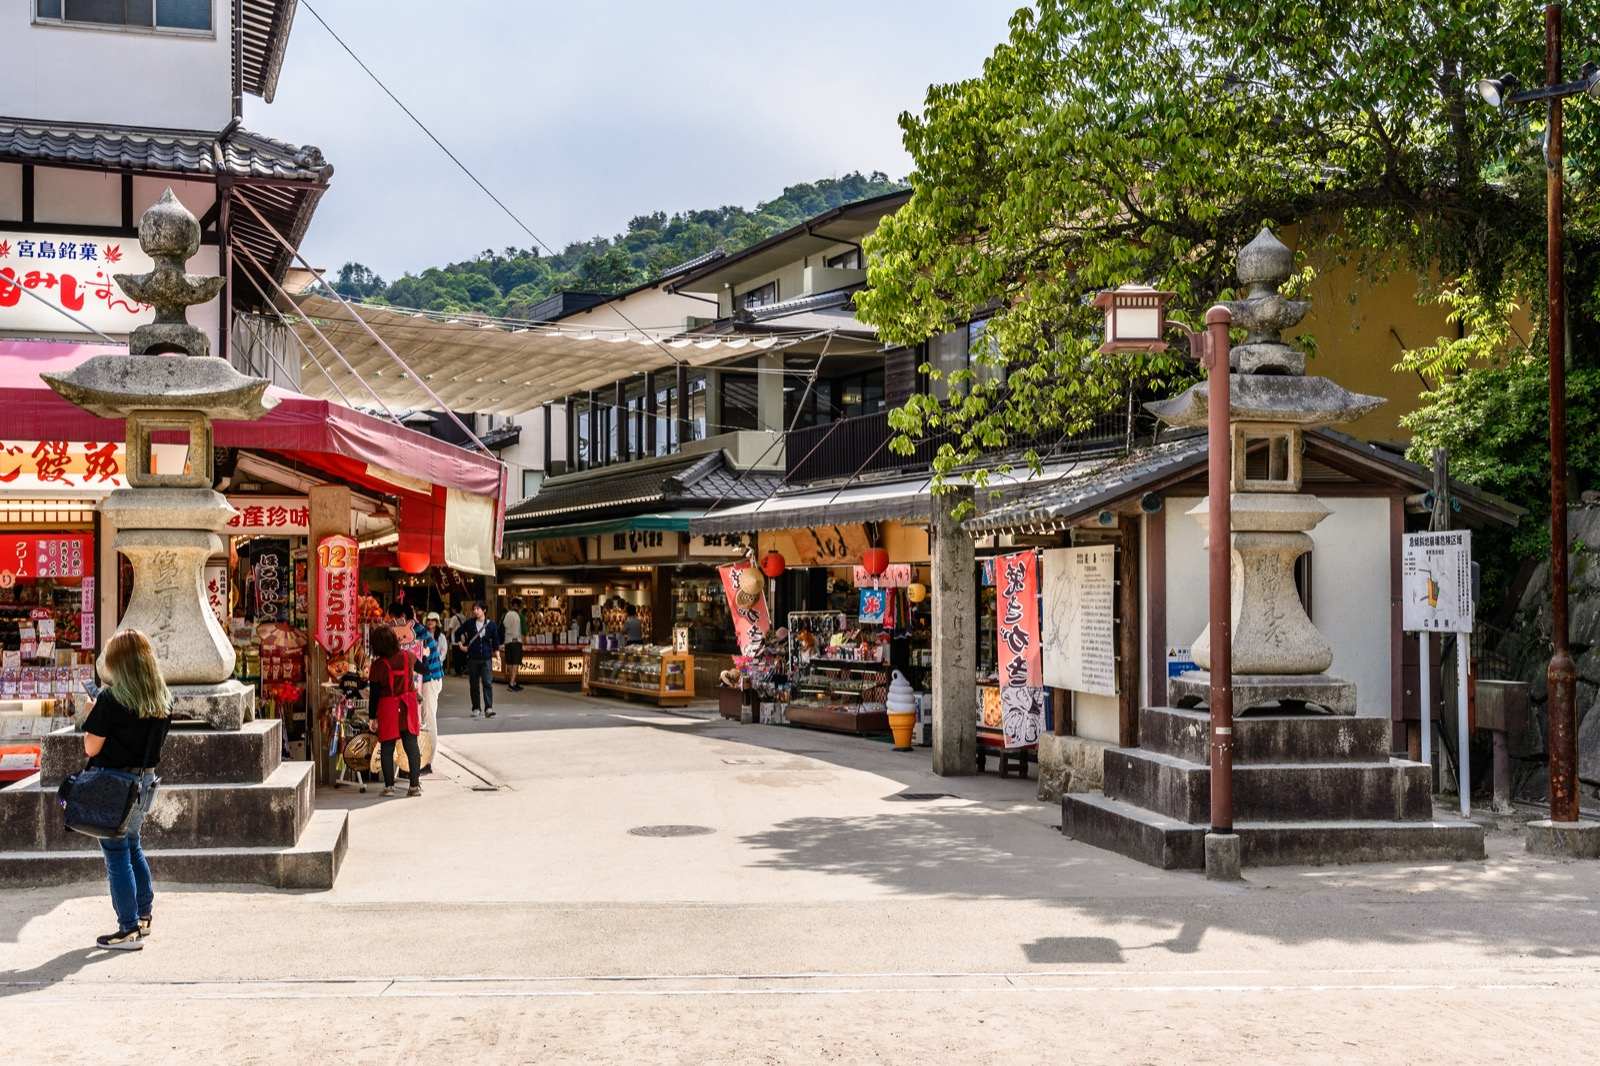 Photo of Omotesando Shopping Street, Japan (Miyajima, Japan by dconvertini)